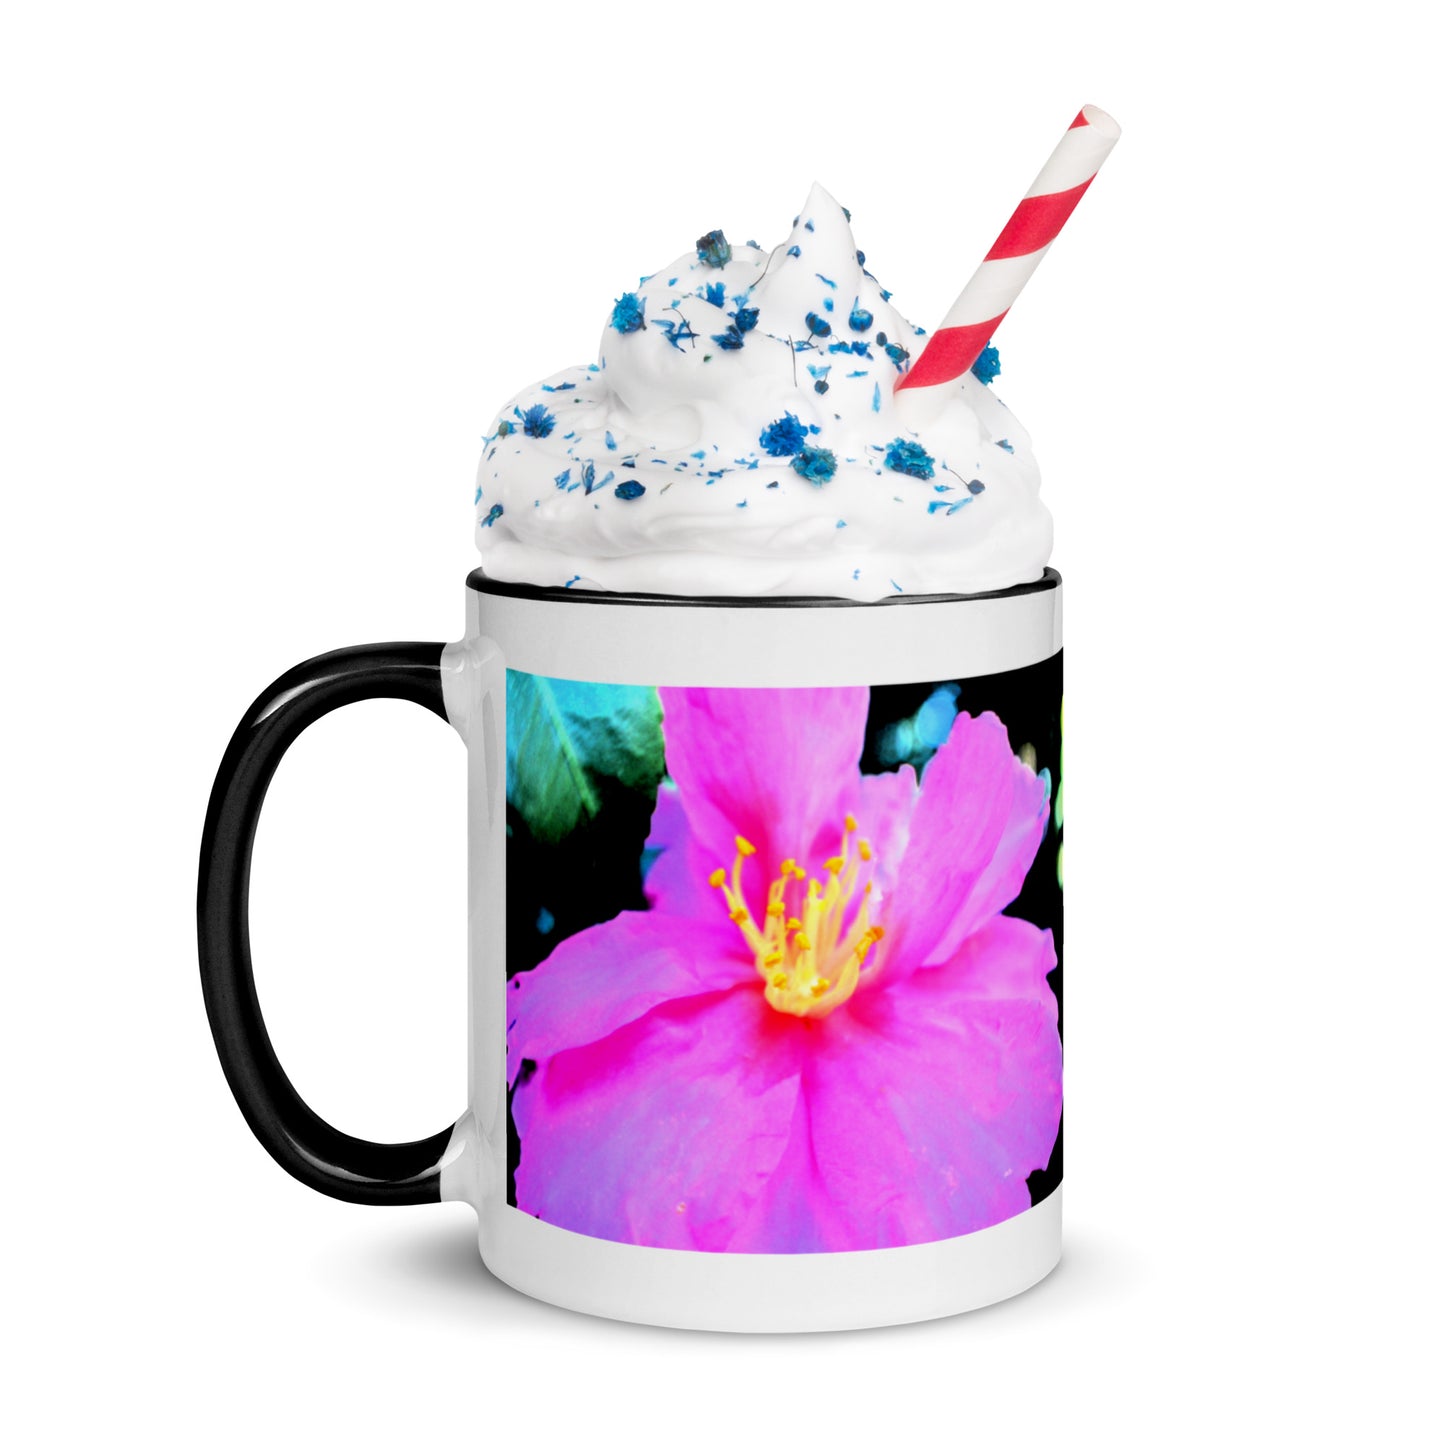 Flower Dream Mug